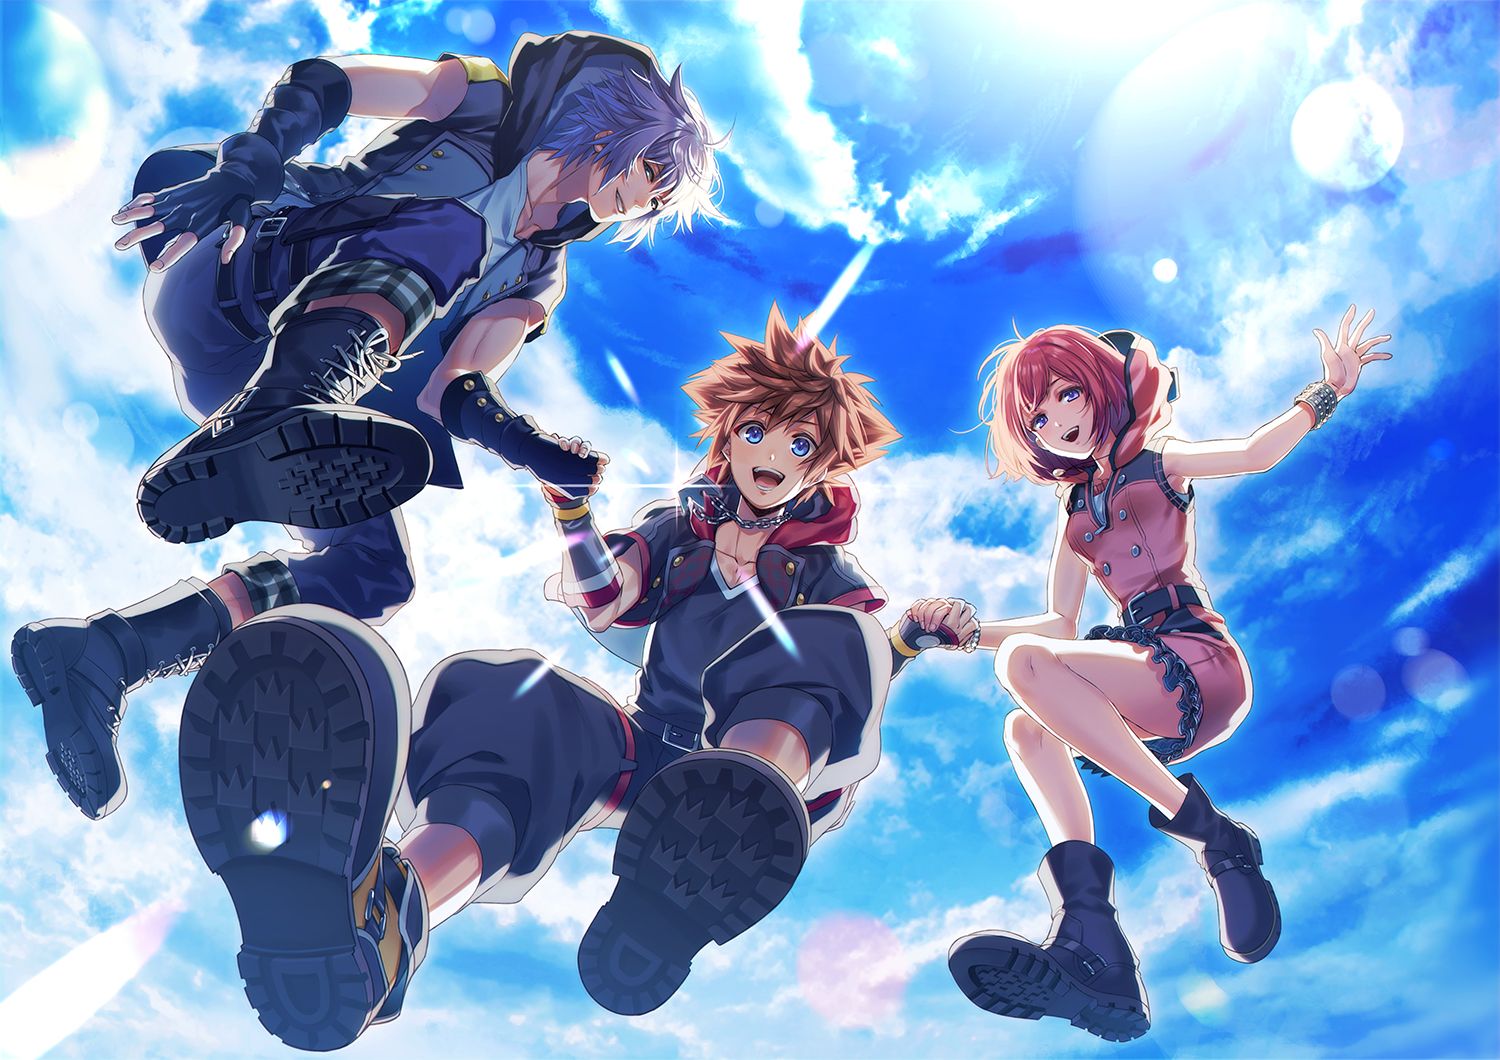 Kingdom Hearts III Anime Image Board